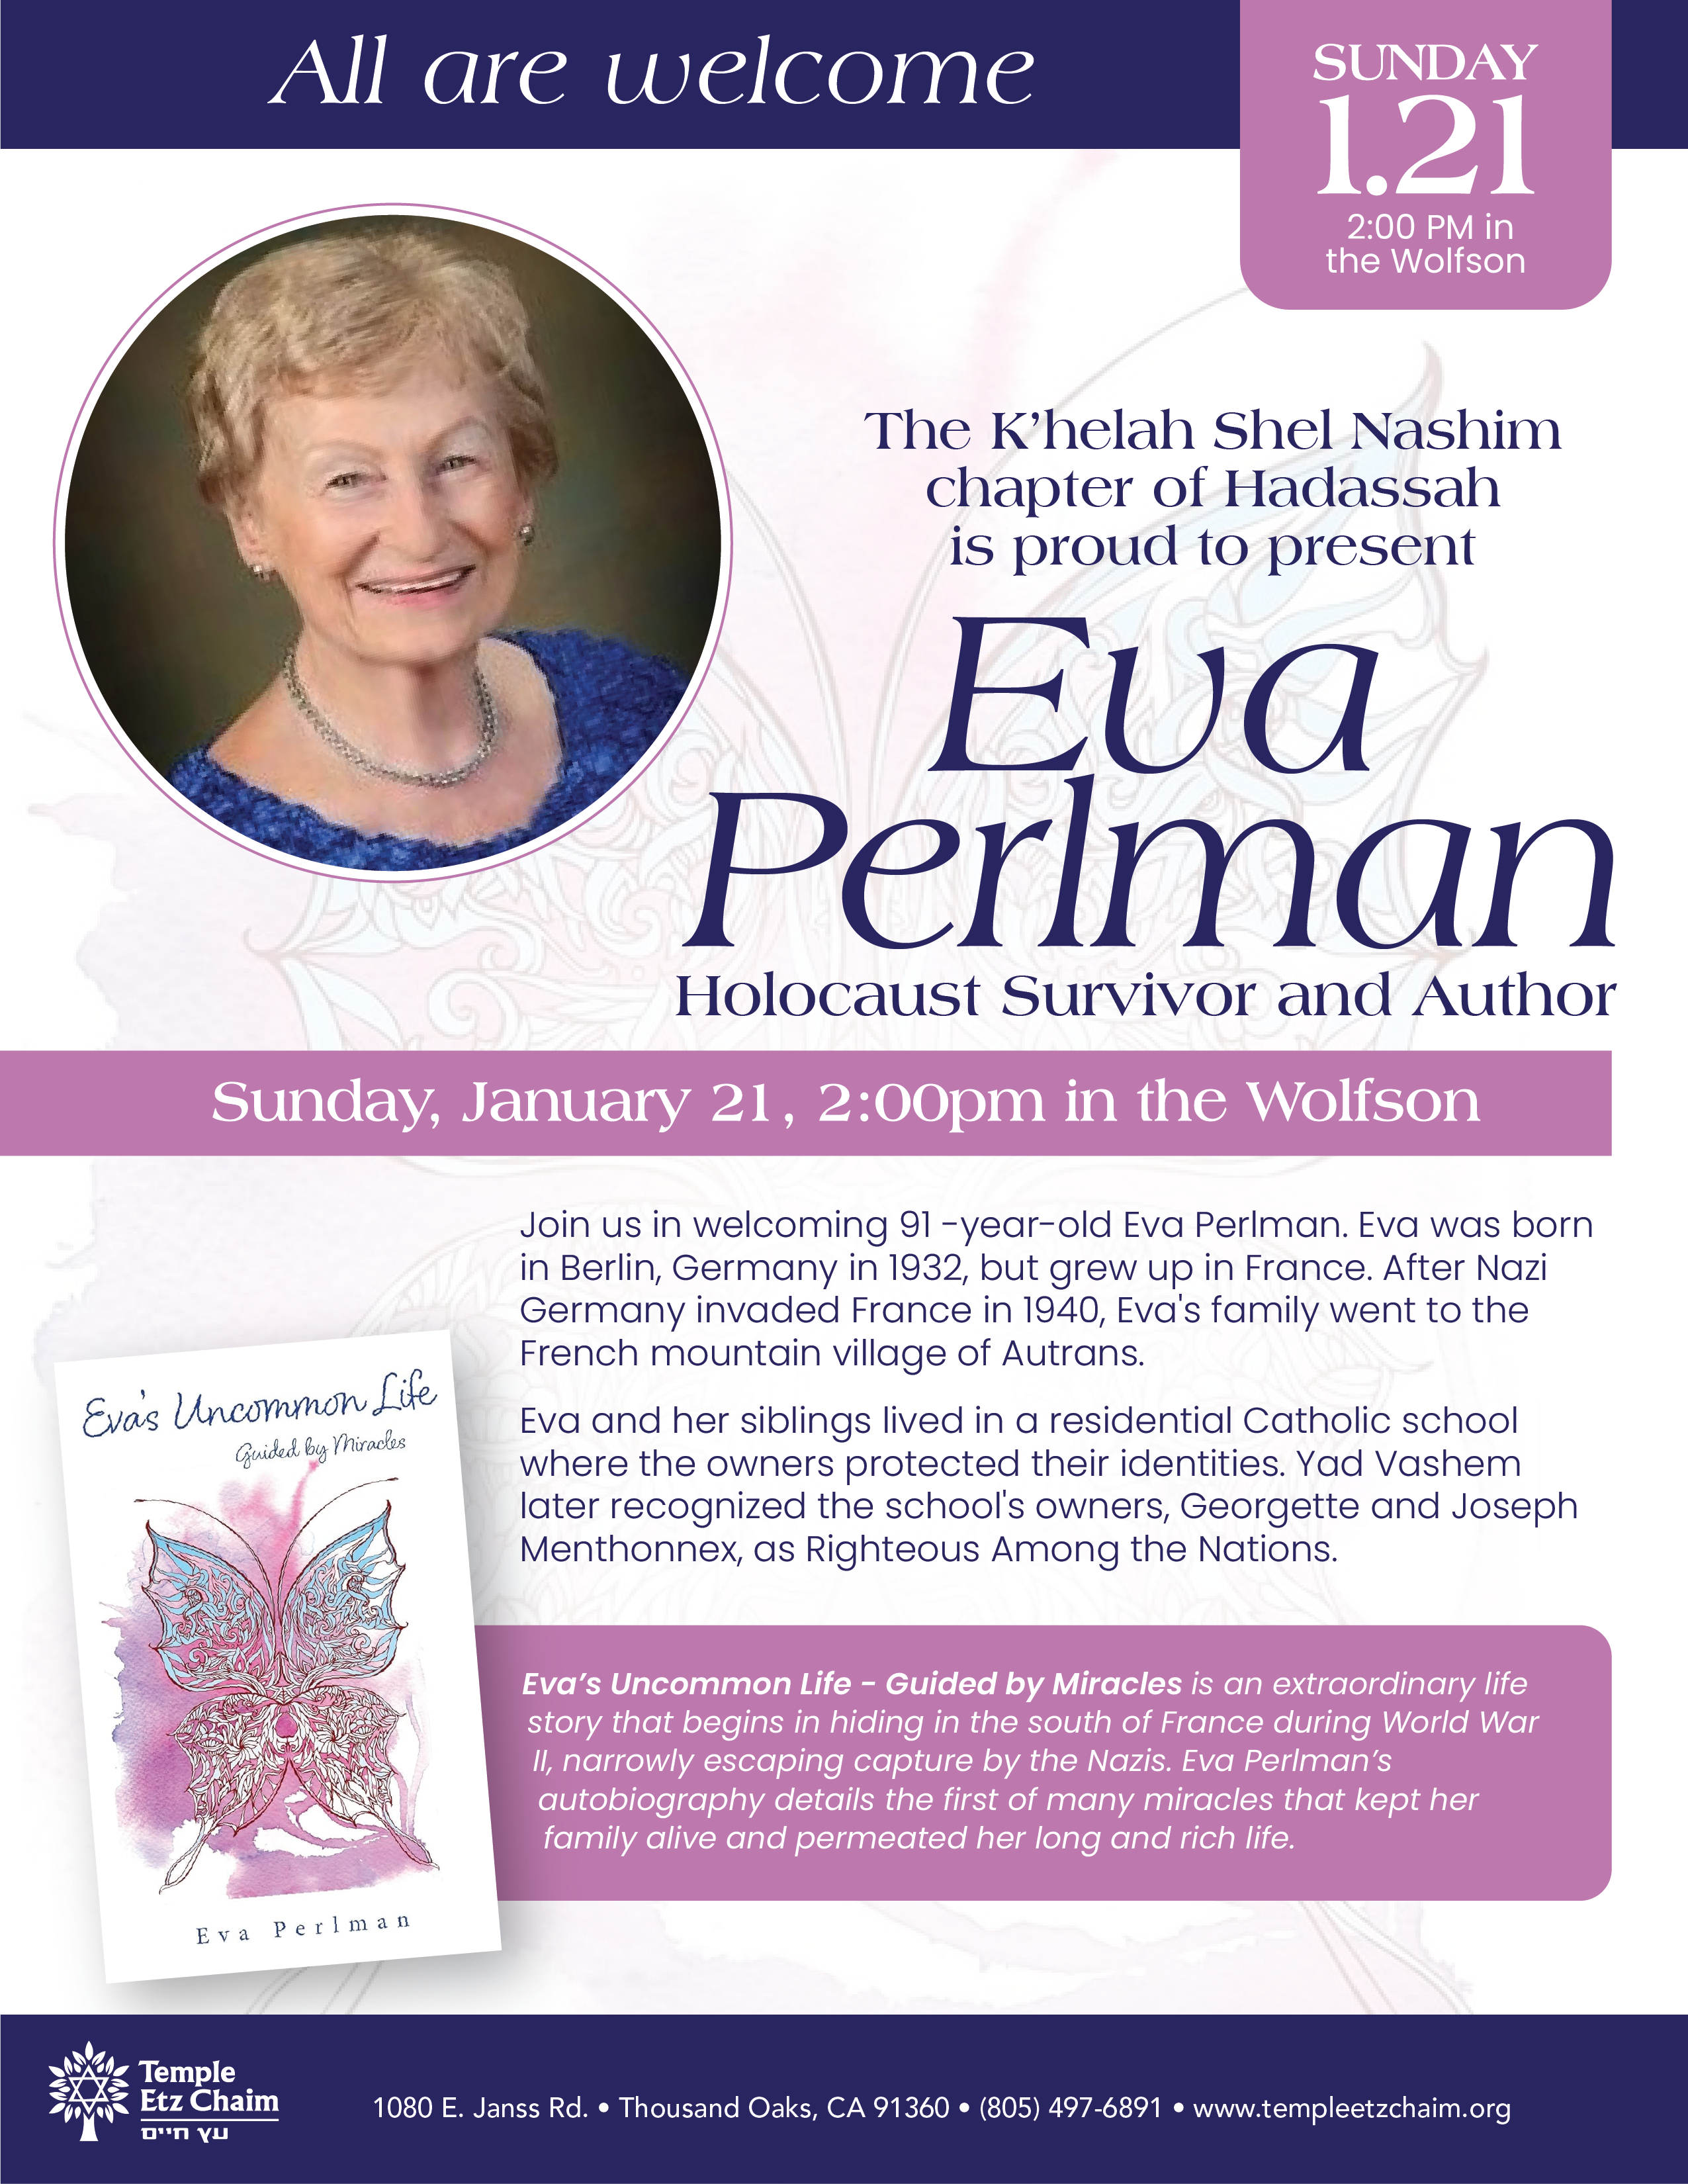 Guest Speaker - Eva Perlman - Holocaust Survivor and Author